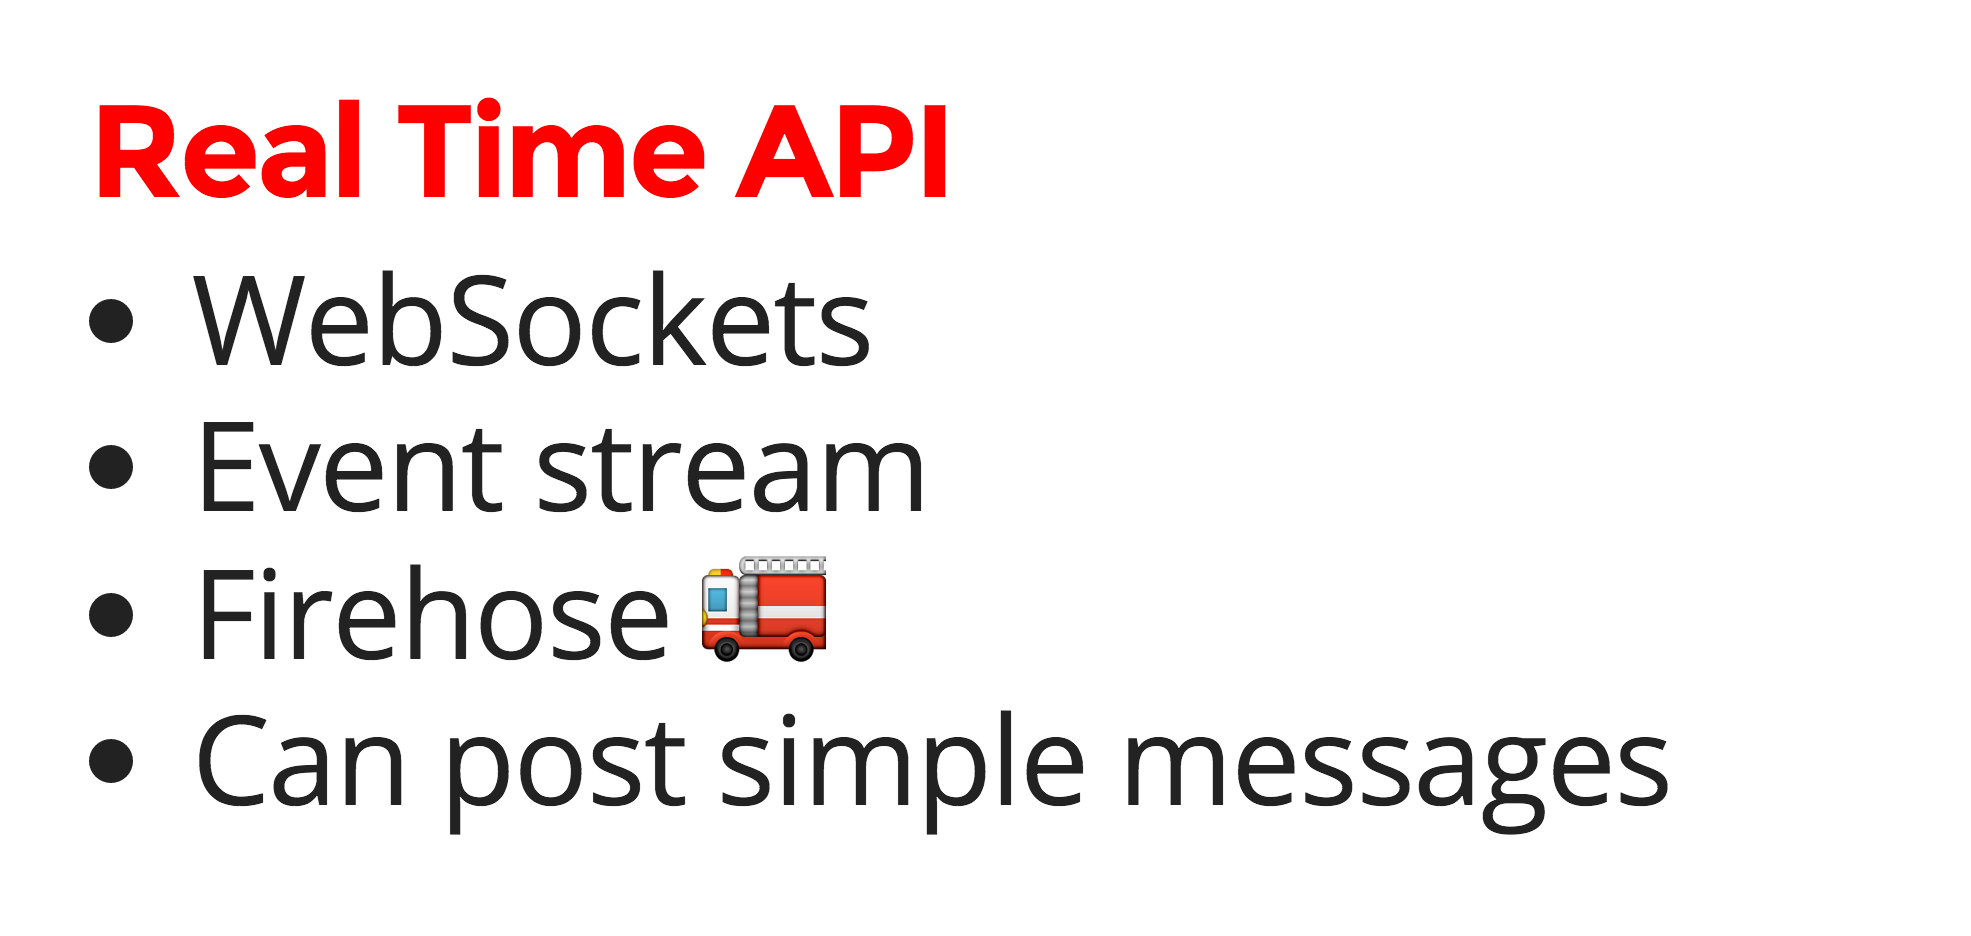 Slack Real Time Messaging API notes